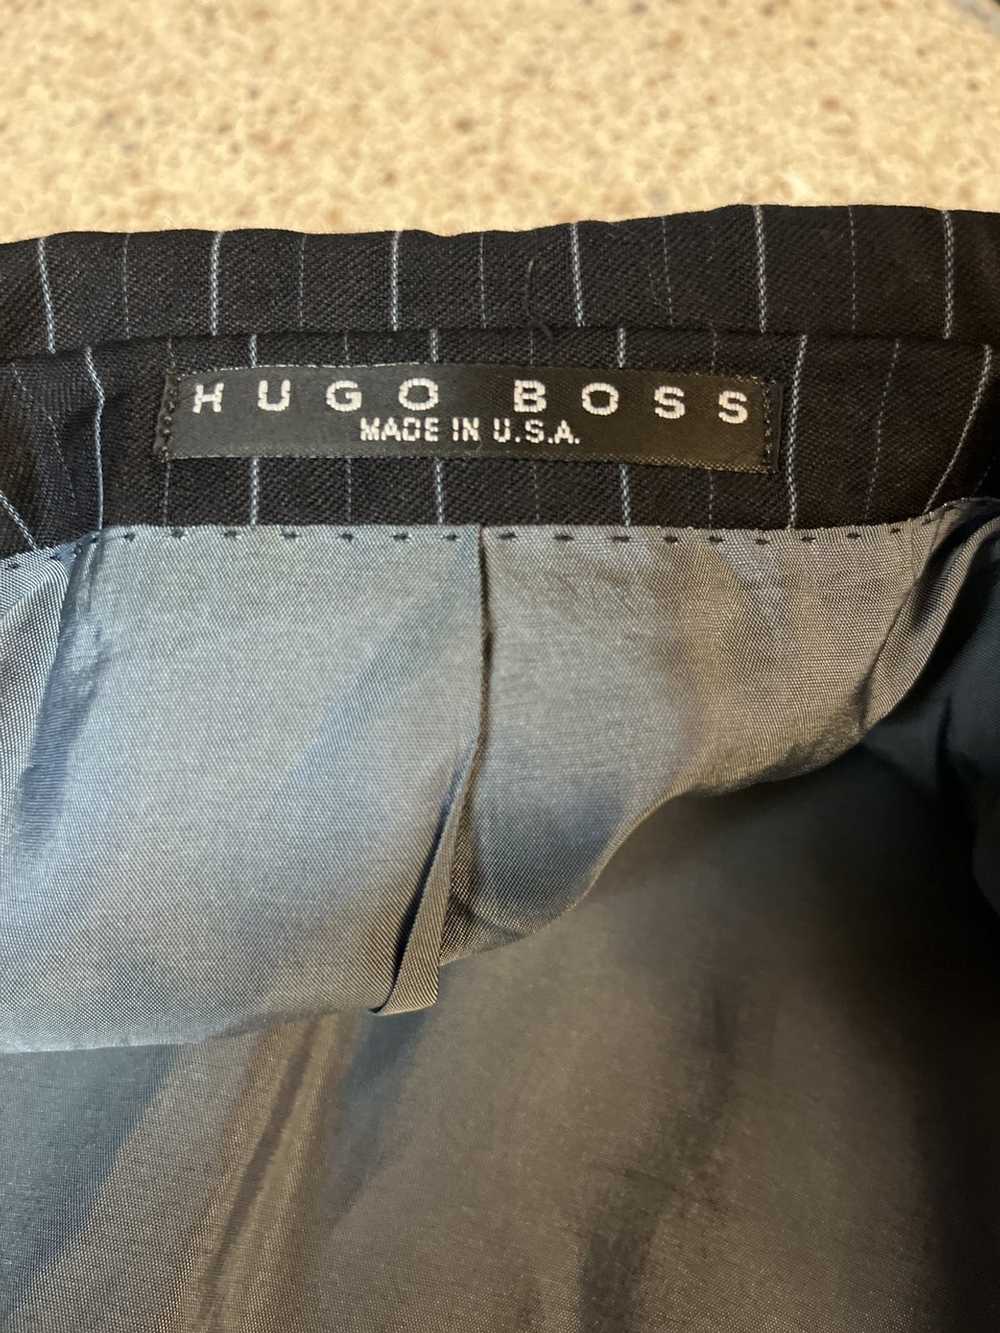 Hugo Boss Hugo Boss Striped Suit Jacket - image 11